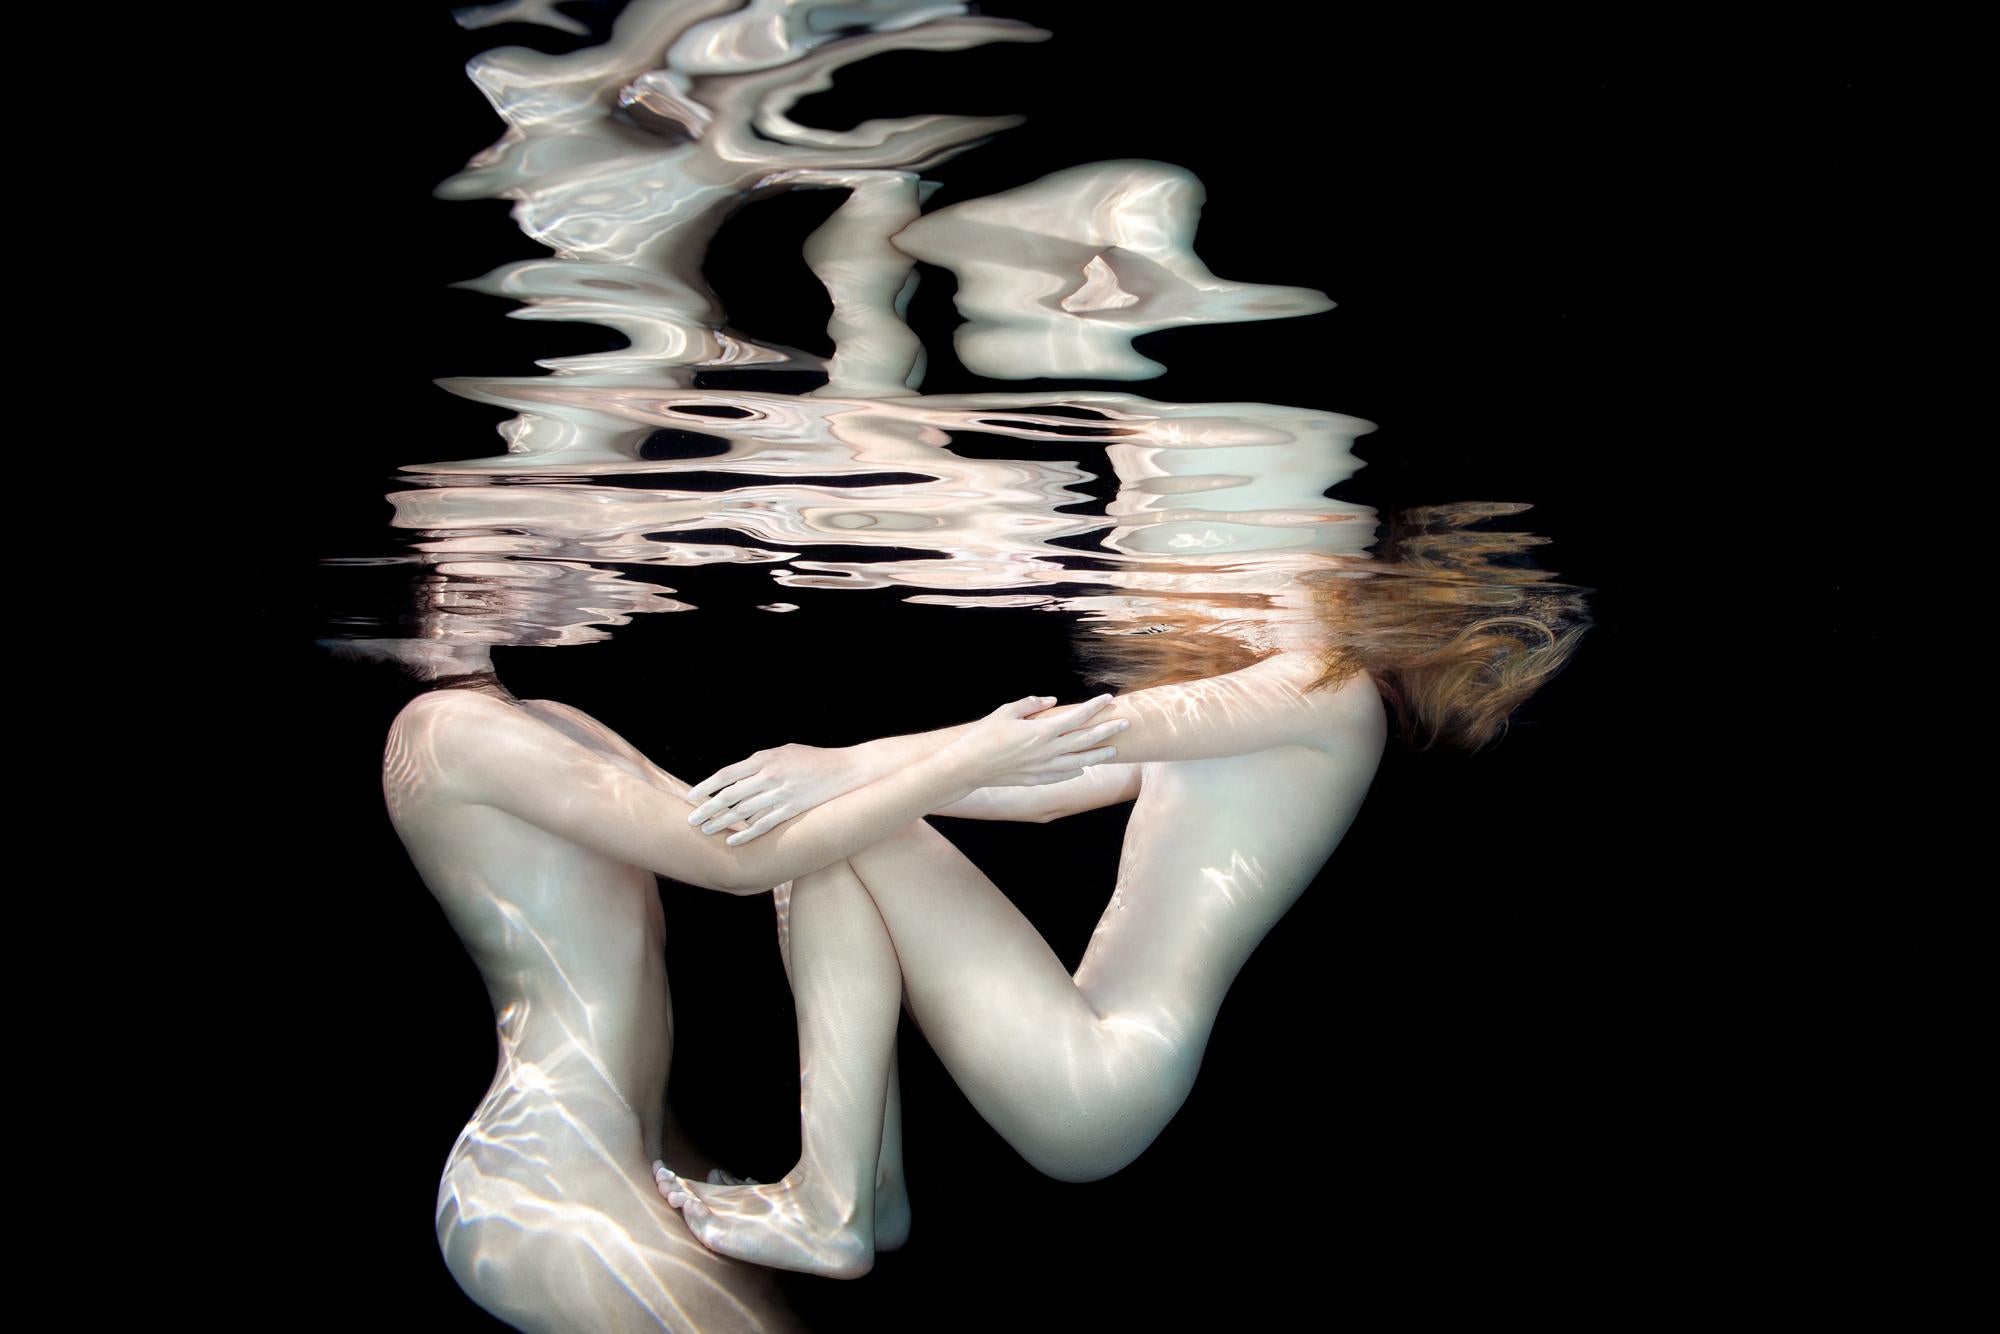 Porcelain  - underwater nude photograph - archival pigment print 35" x 52"